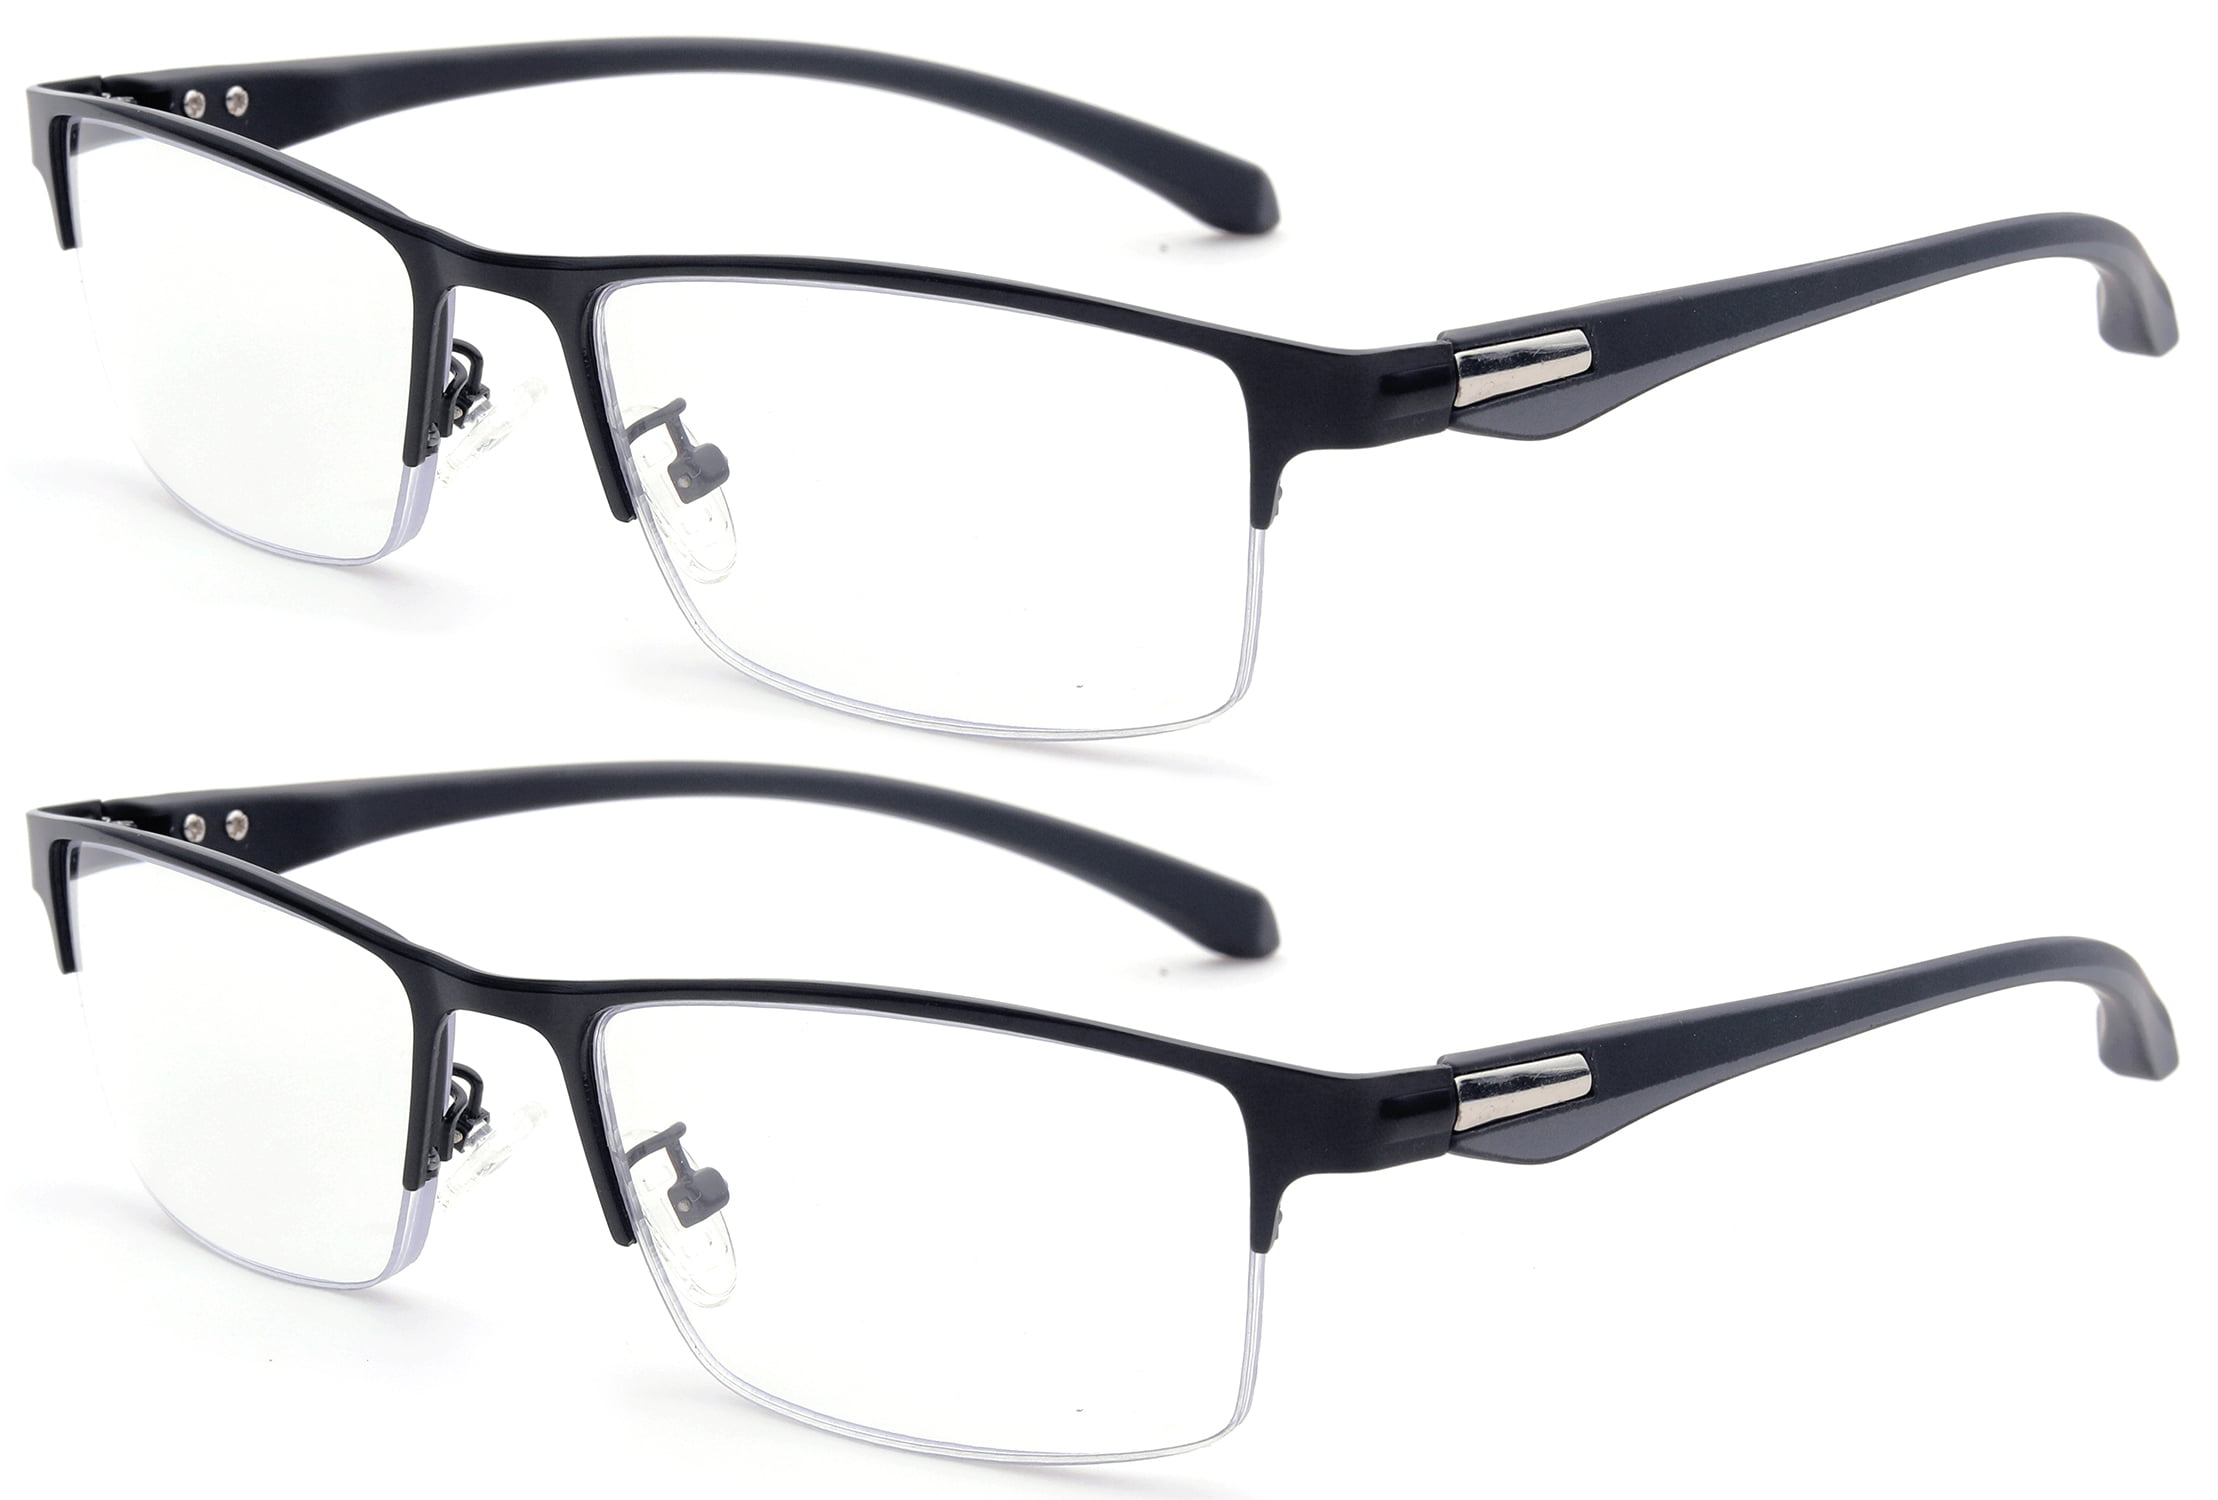 Walmart Vision & Glasses - wide 7